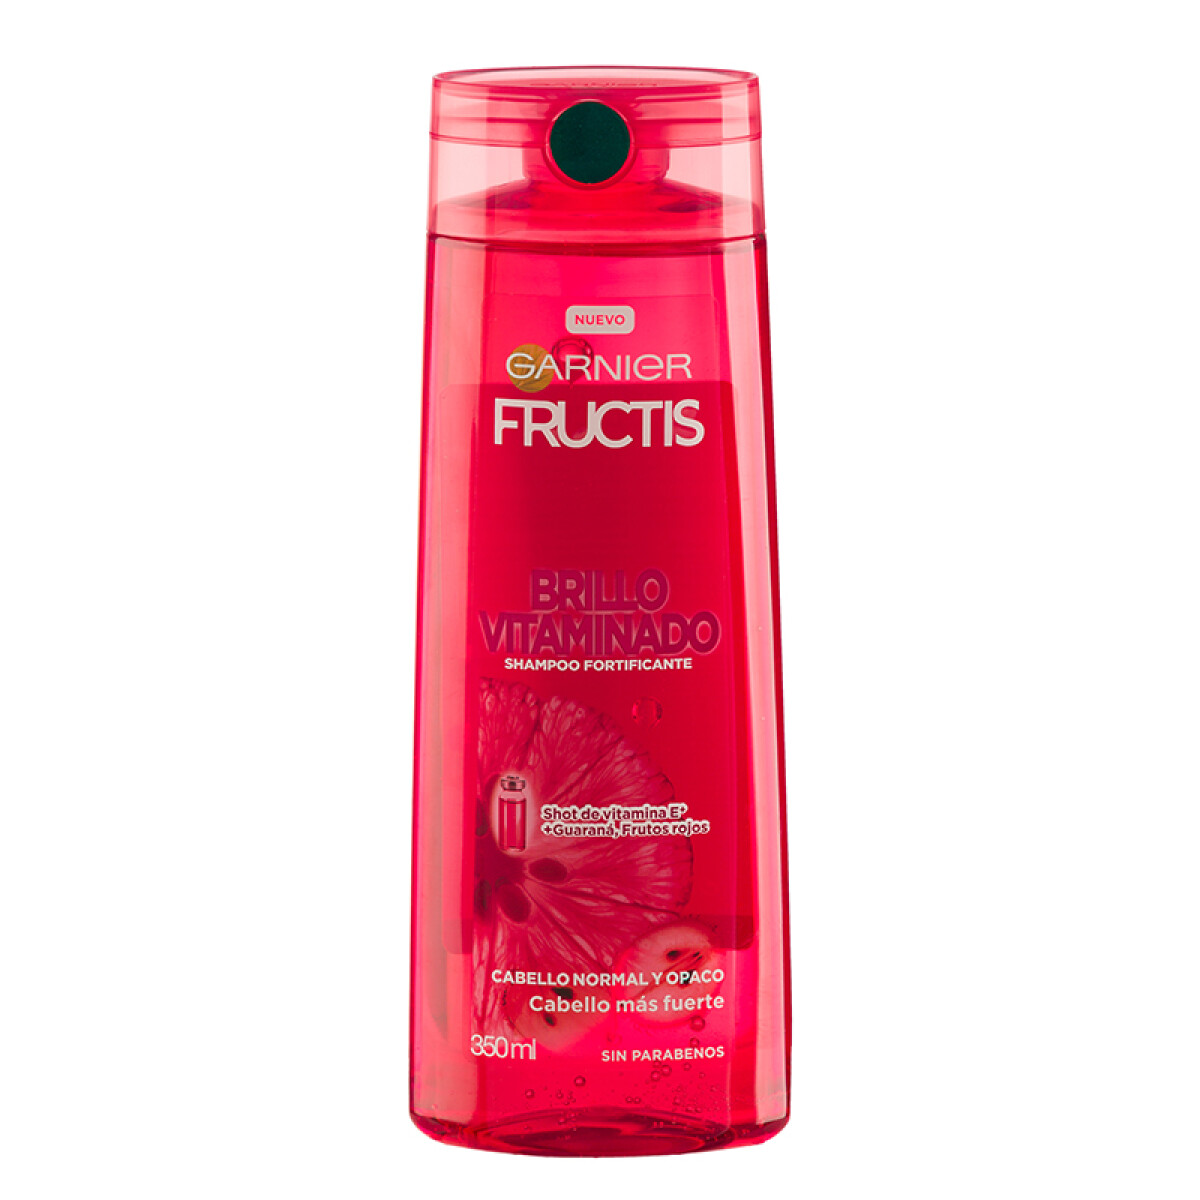 Shampoo Garnier Fructis 350 ml - Brillo vitaminado 